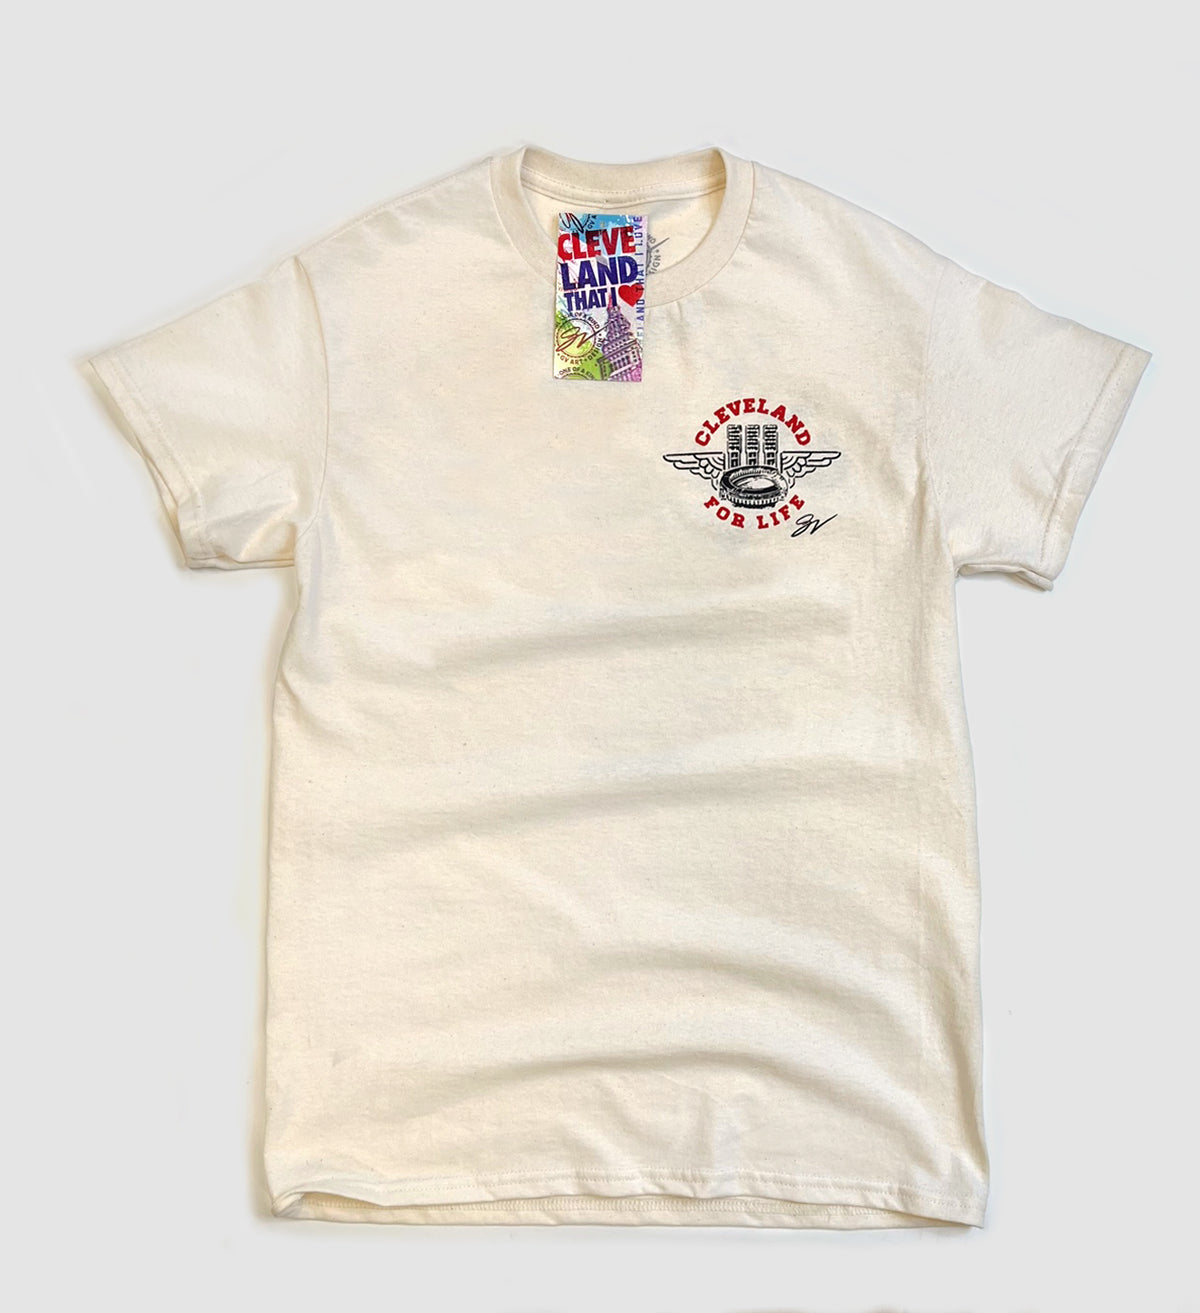 theLandTshirts Wild Thing Major League Cool Baseball Fan T Shirt Long Sleeve / Black / Large